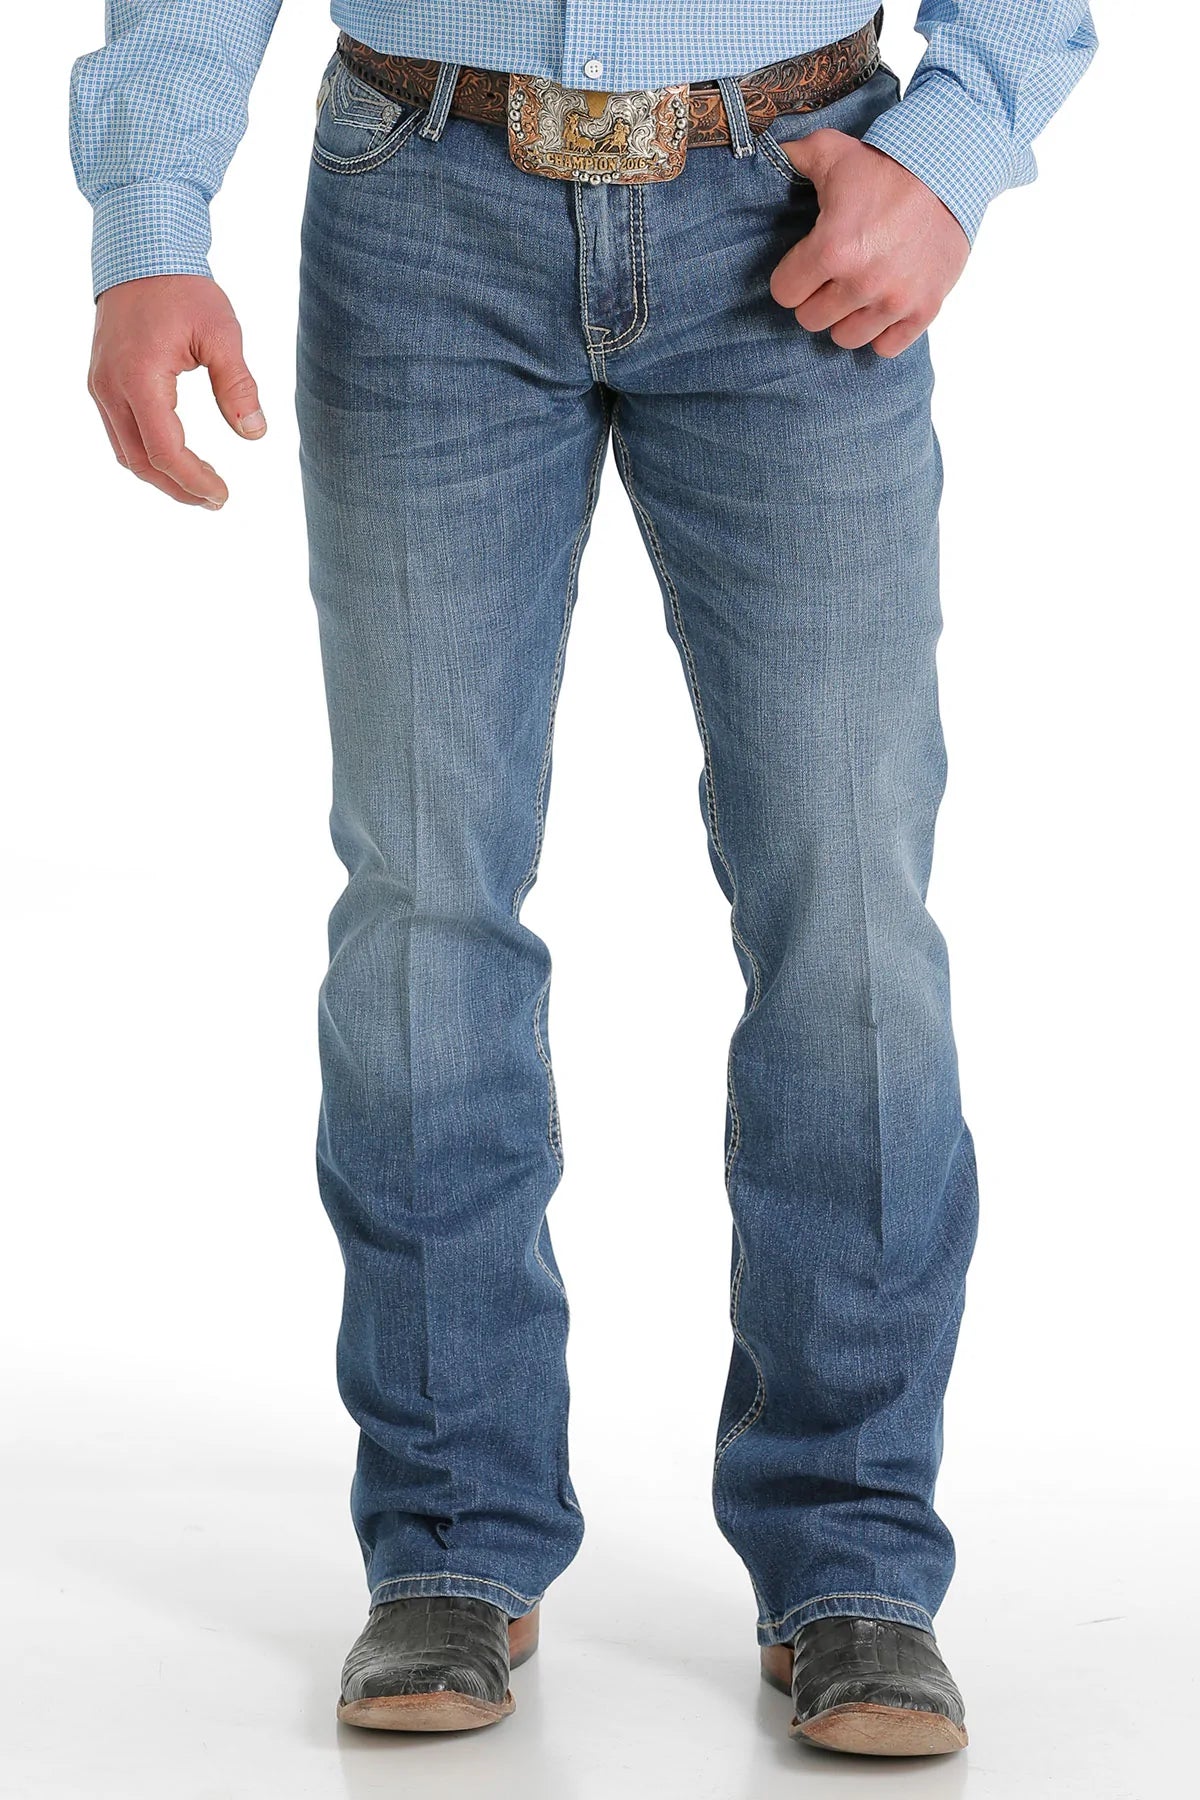 Cinch Jeans - White Label ArenaFlex